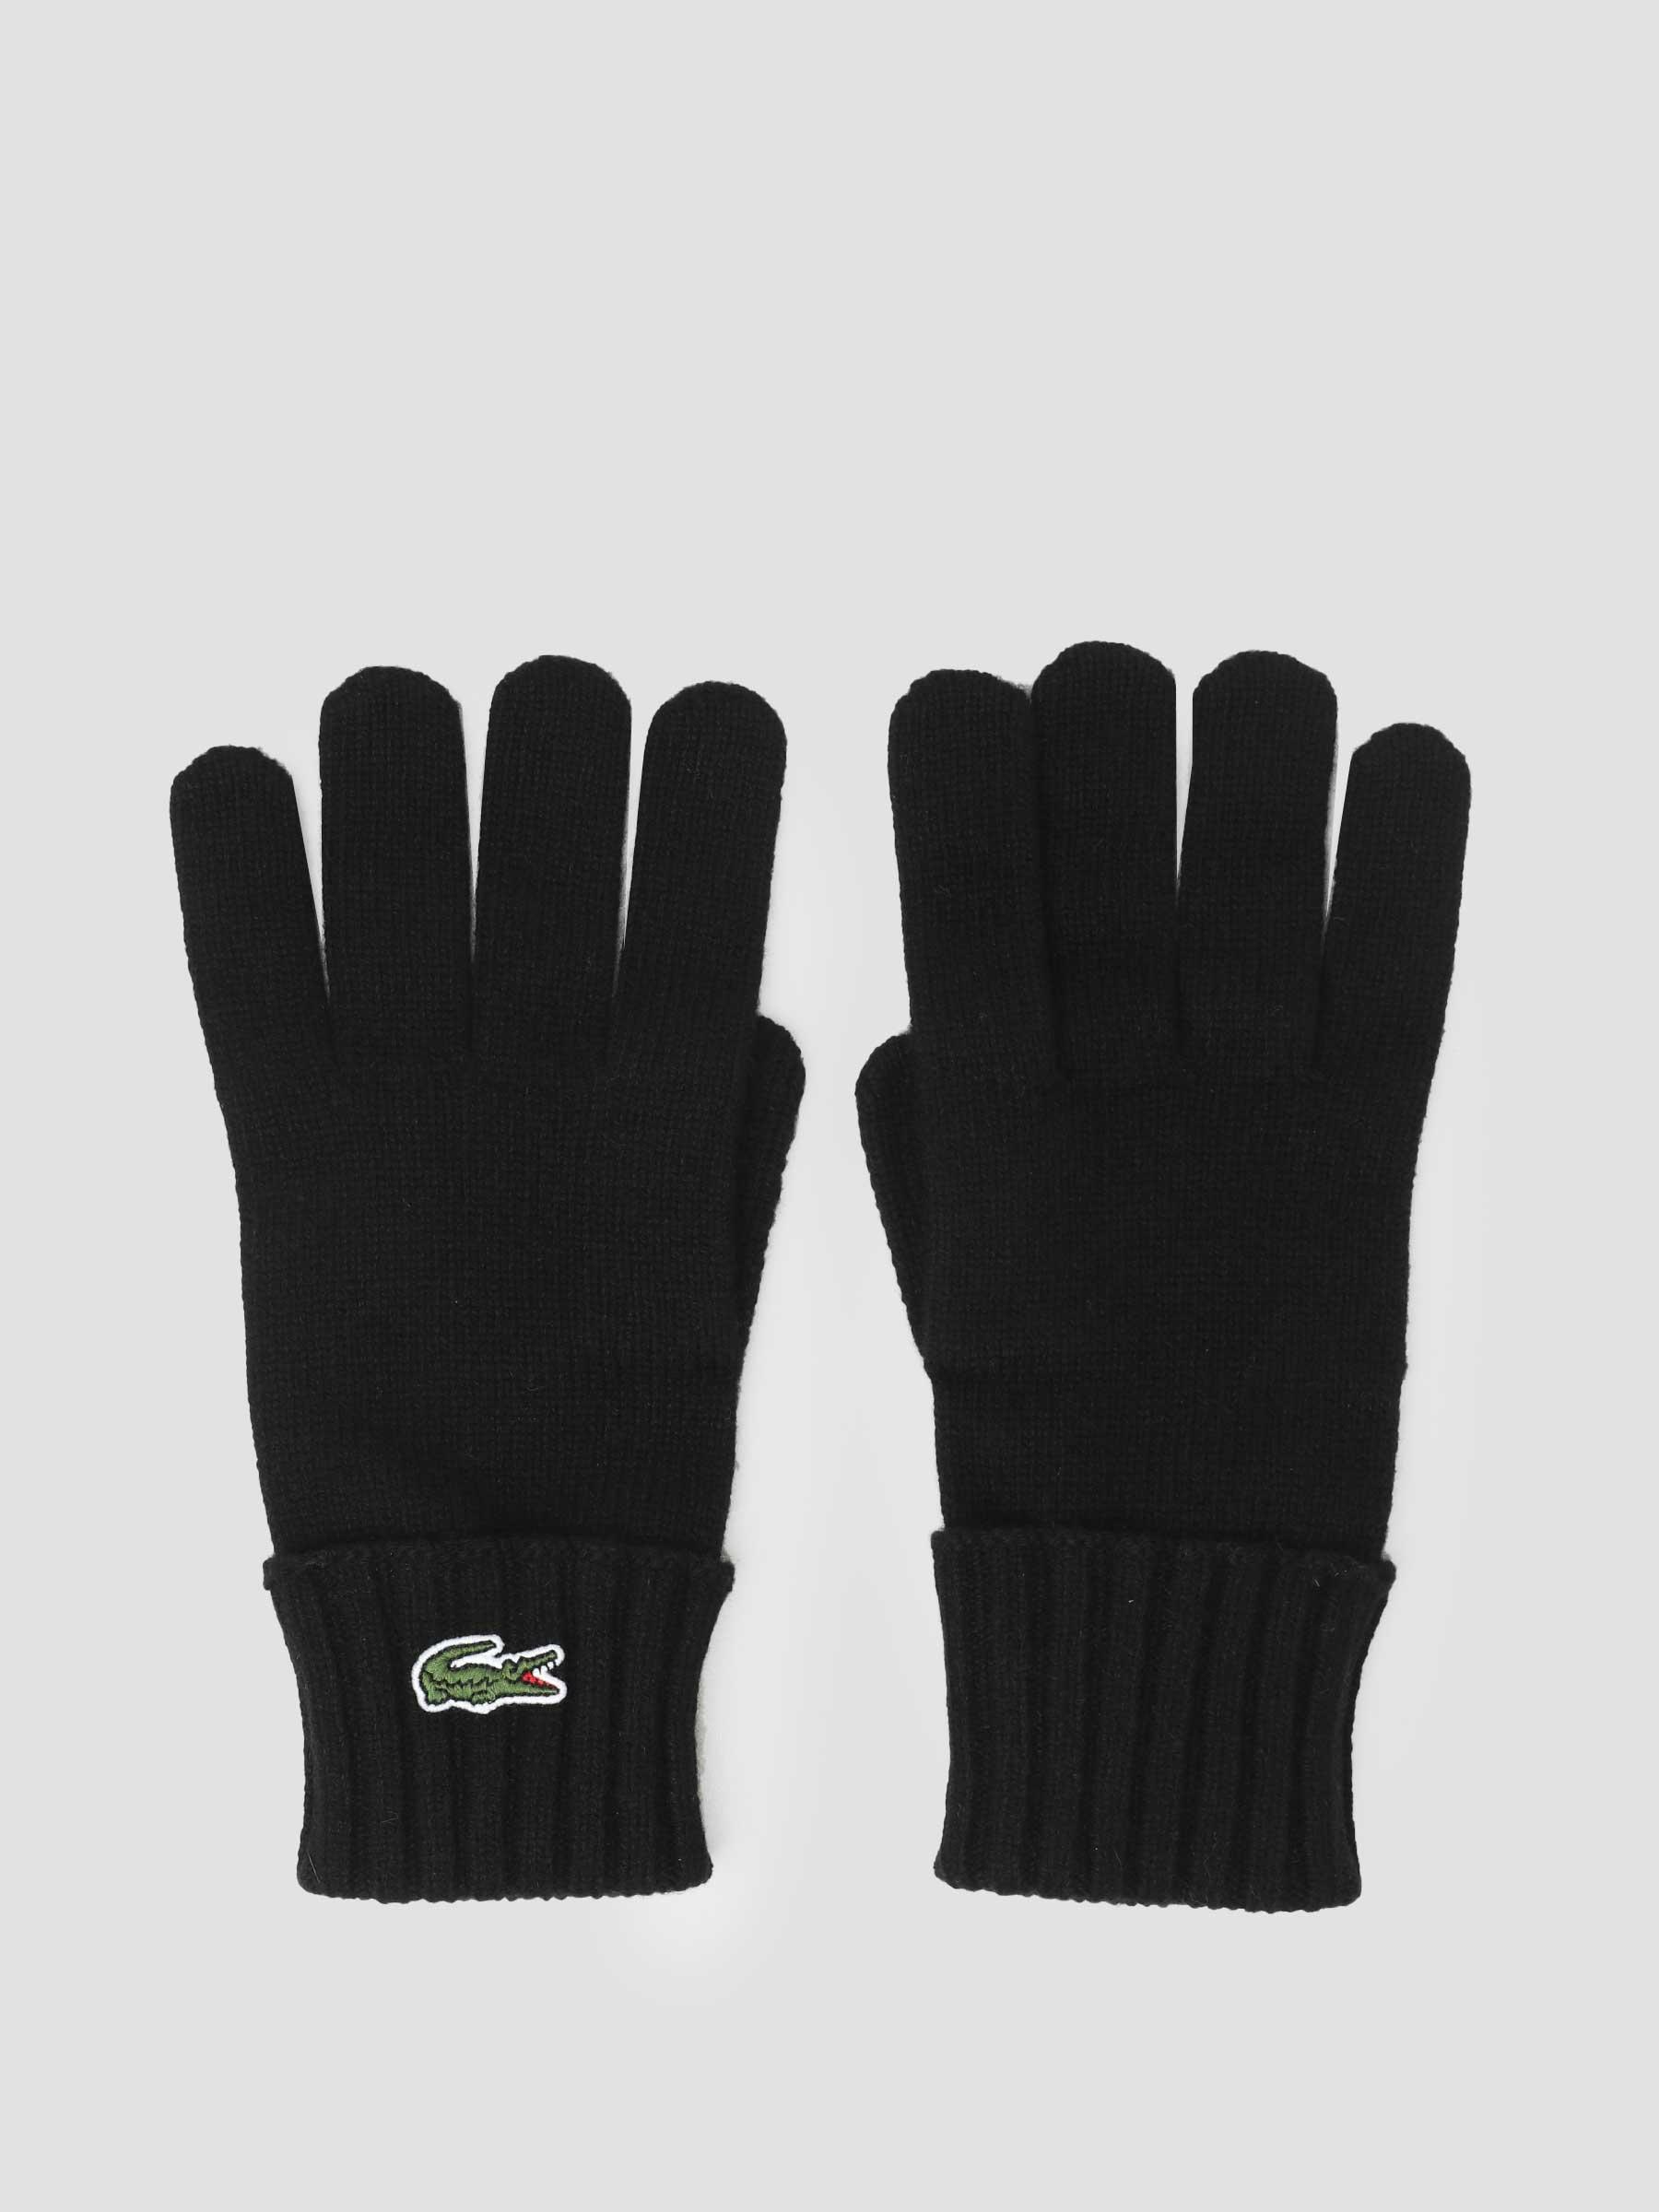 2G61 Gloves 09 Black RV2783-13